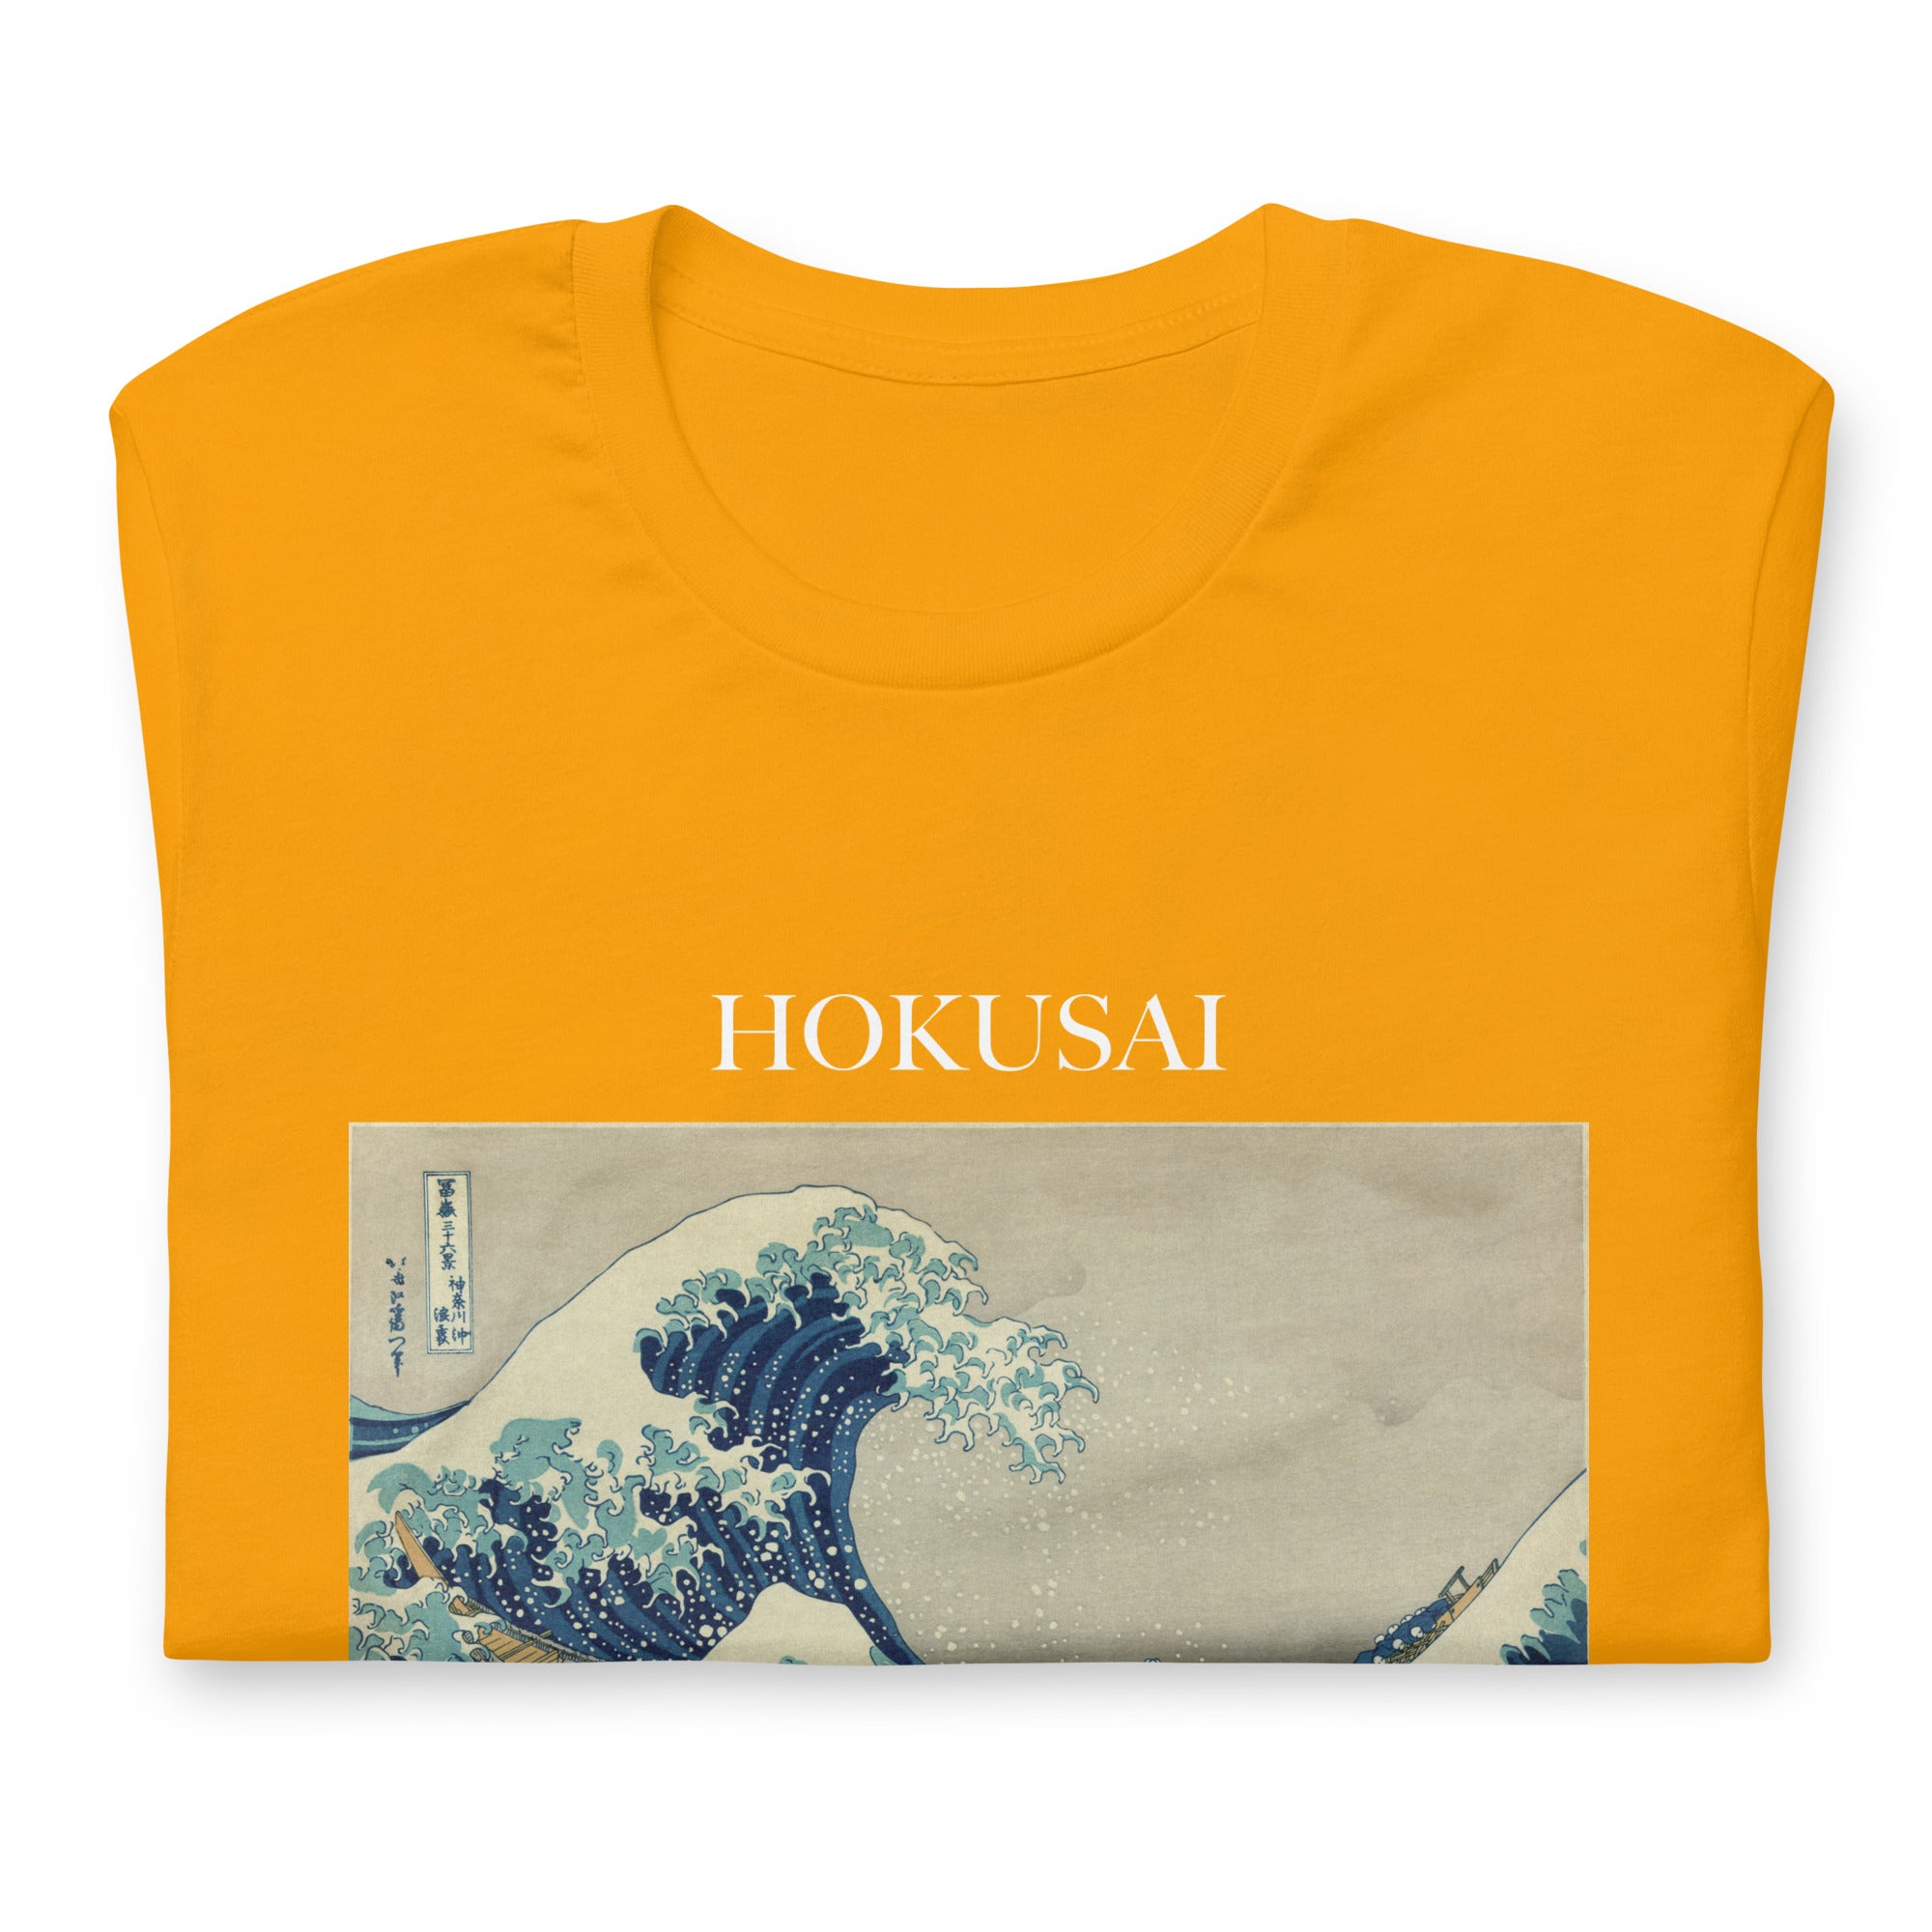 Hokusai 'The Great Wave off Kanagawa' Famous Painting T-Shirt | Unisex Classic Art Tee